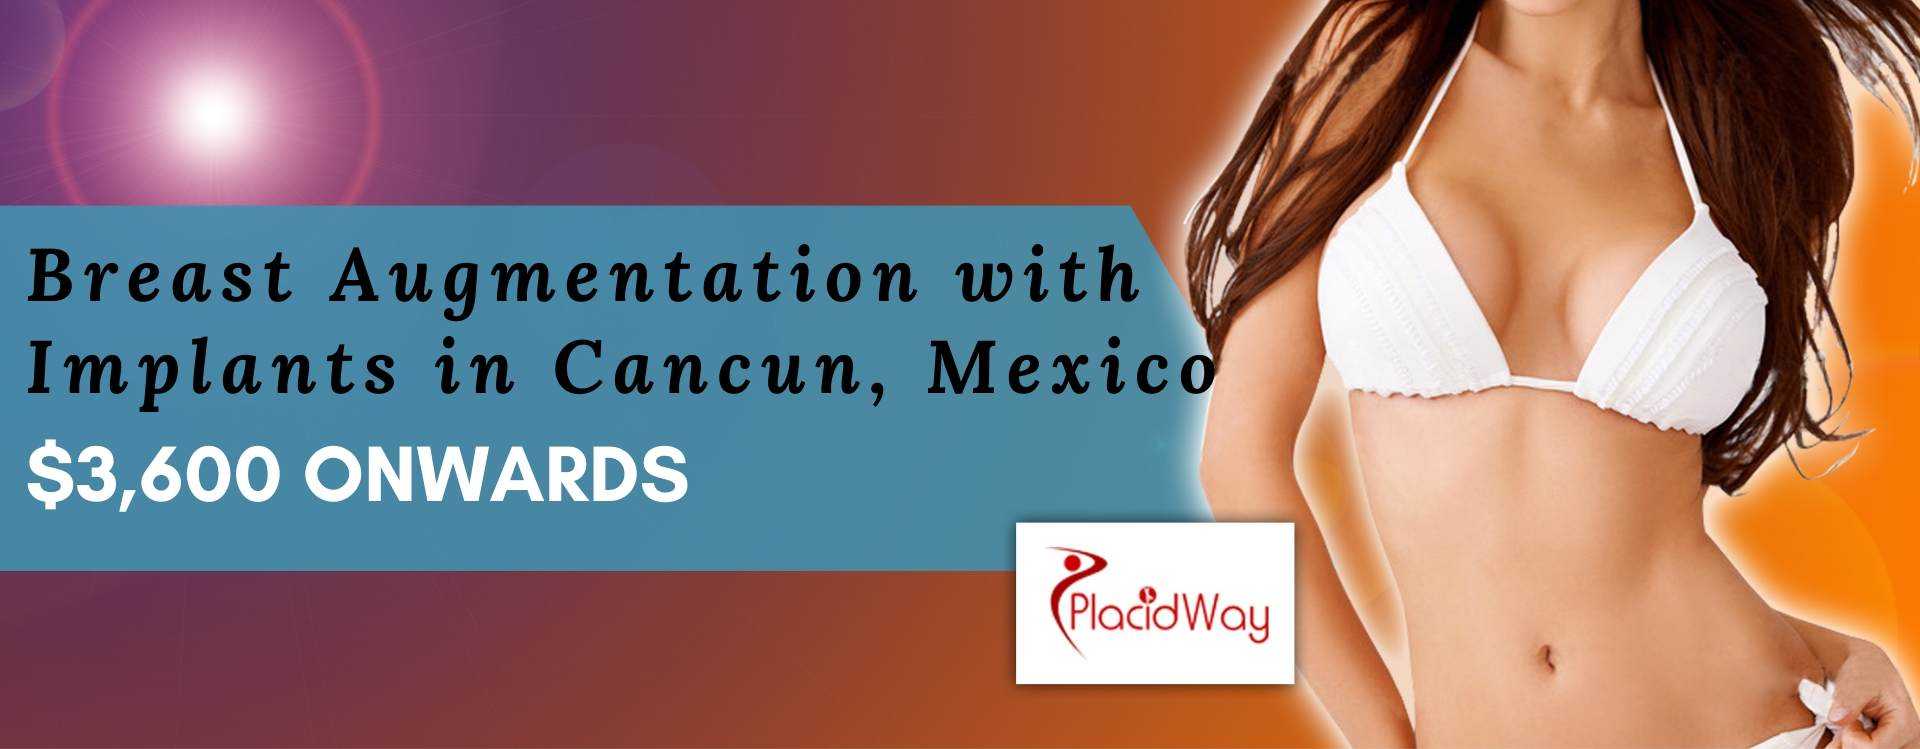 Breast Augmentation Cost in Cancun, Mexico